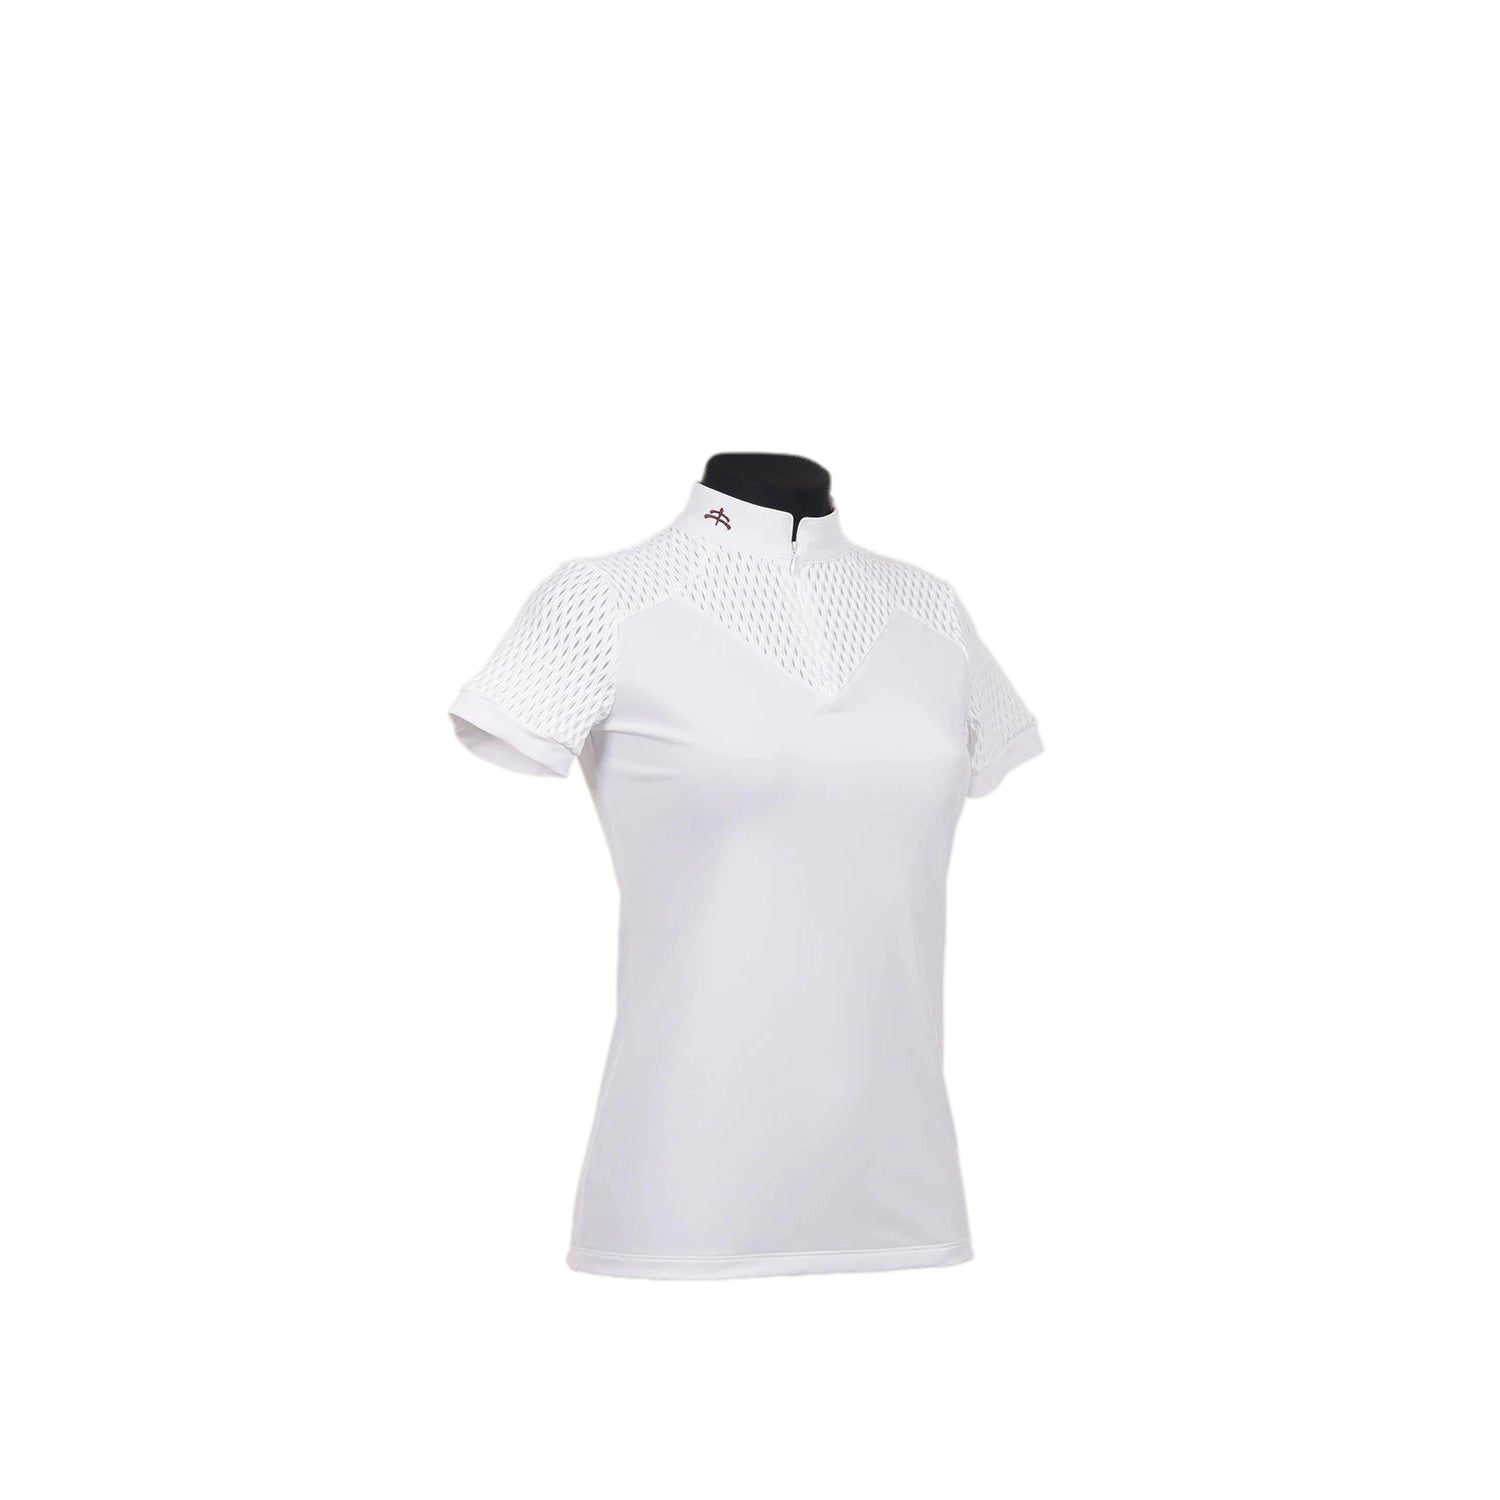 The KJ Short Sleeve Competition Shirt